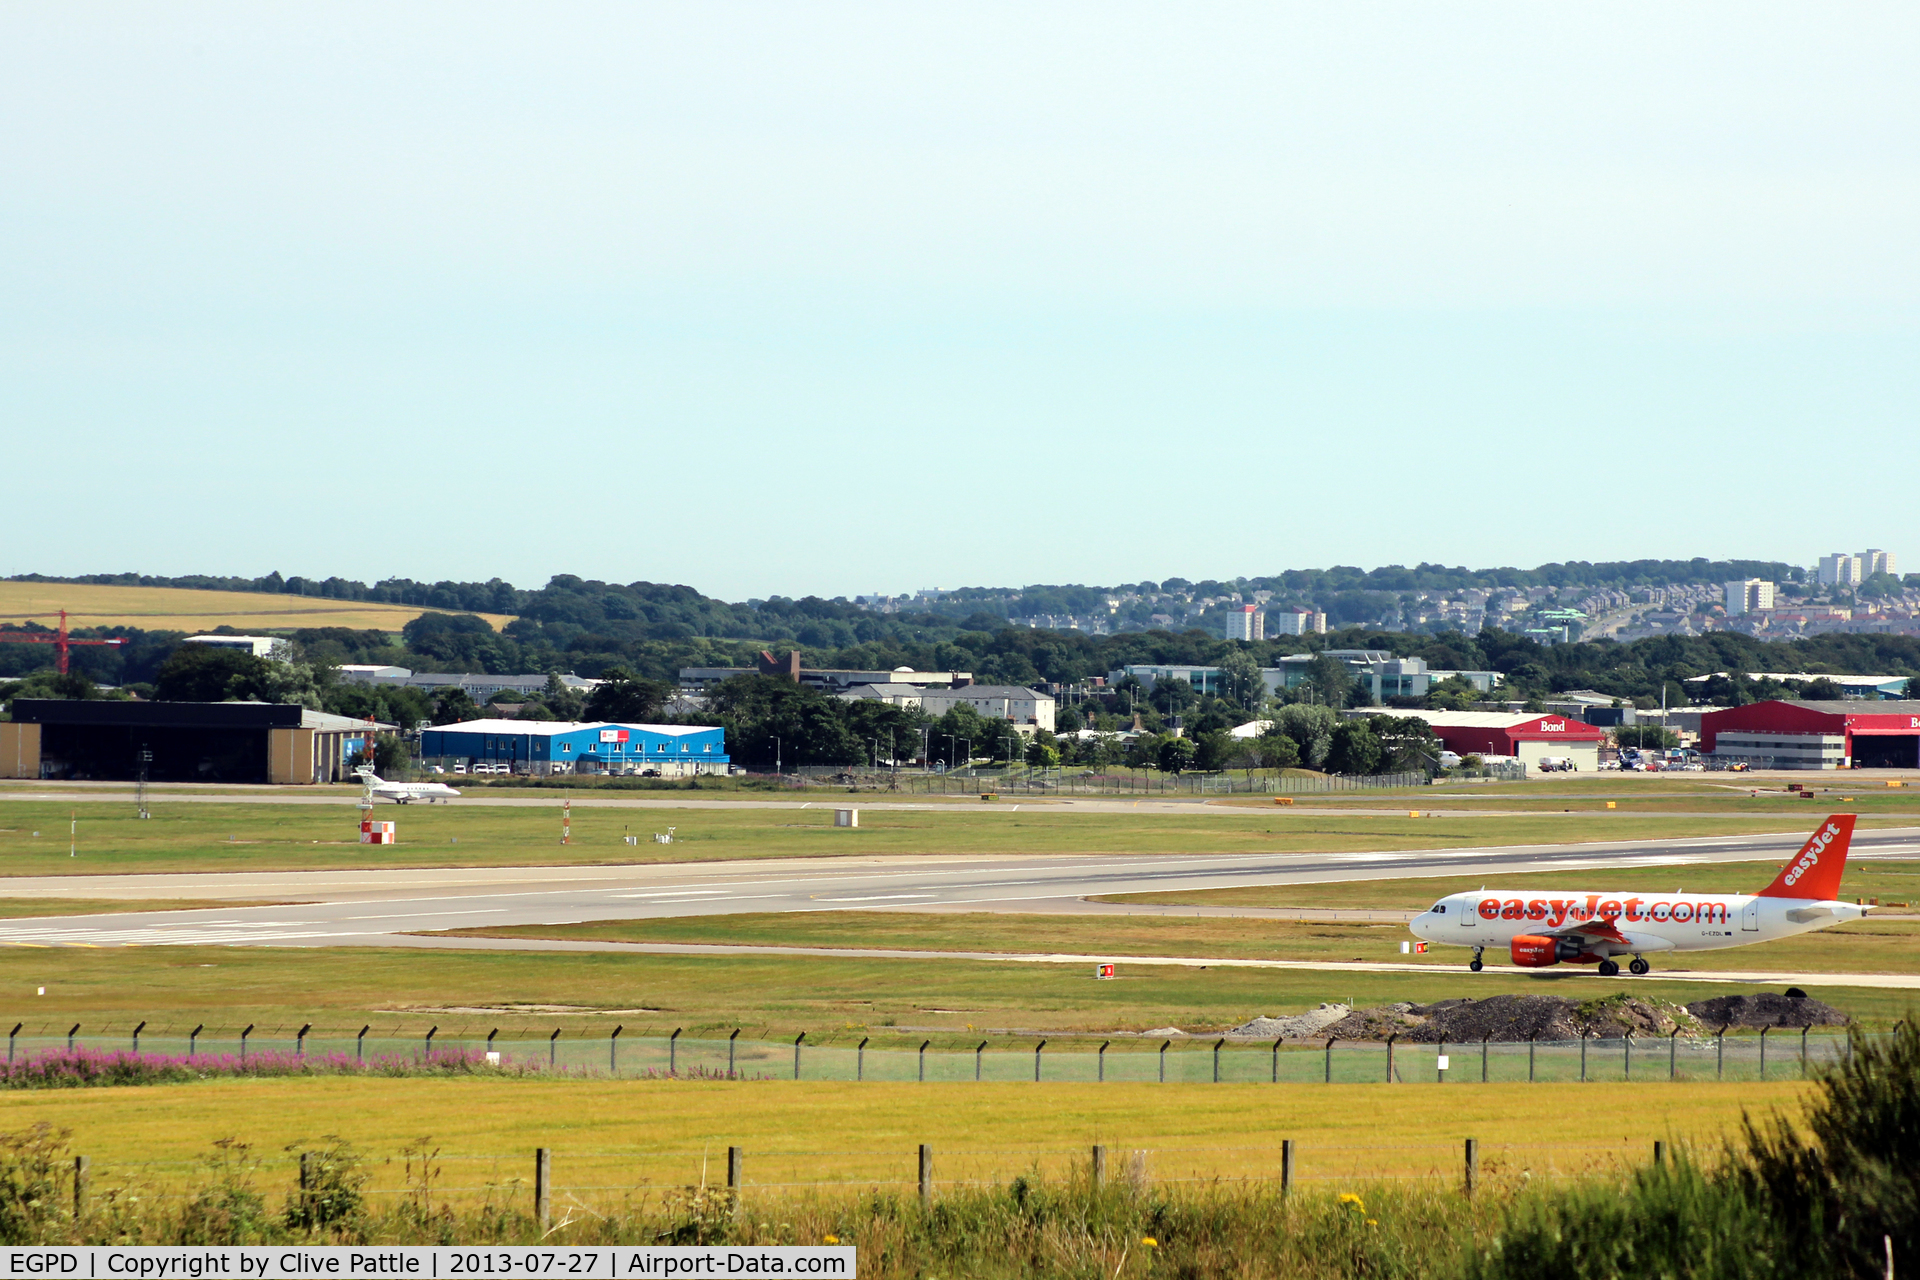 Aberdeen Airport, Aberdeen, Scotland United Kingdom (EGPD) - Easyjet G-EZDL on hold at Aberdeen EGPD